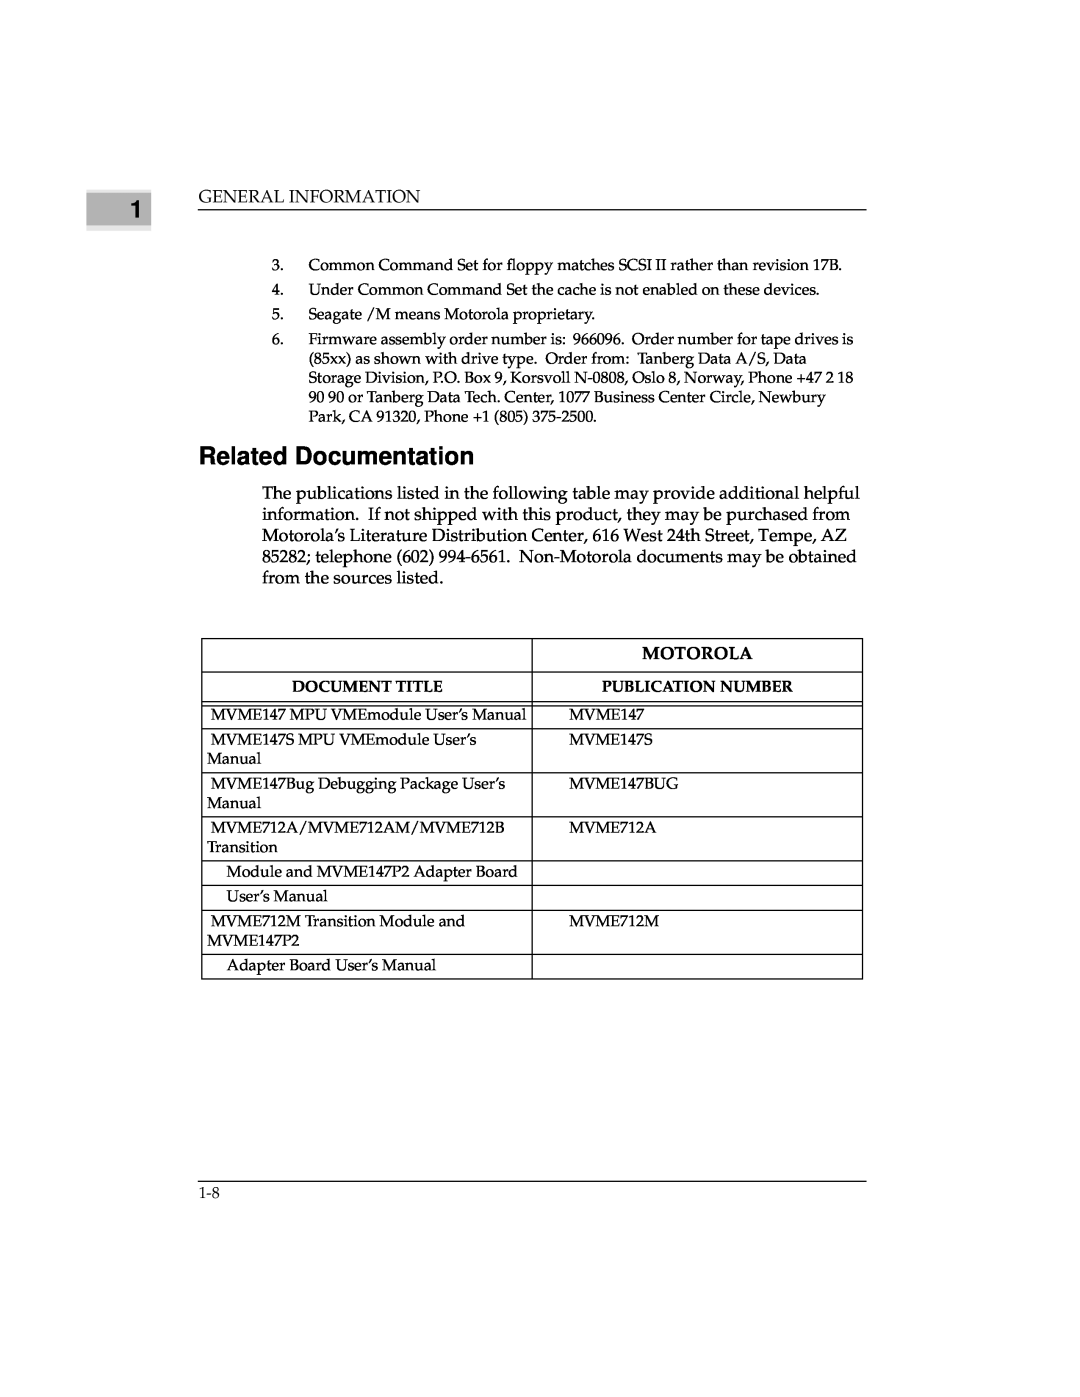 Emerson MVME147 manual Related Documentation, Motorola, Document Title, Publication Number 